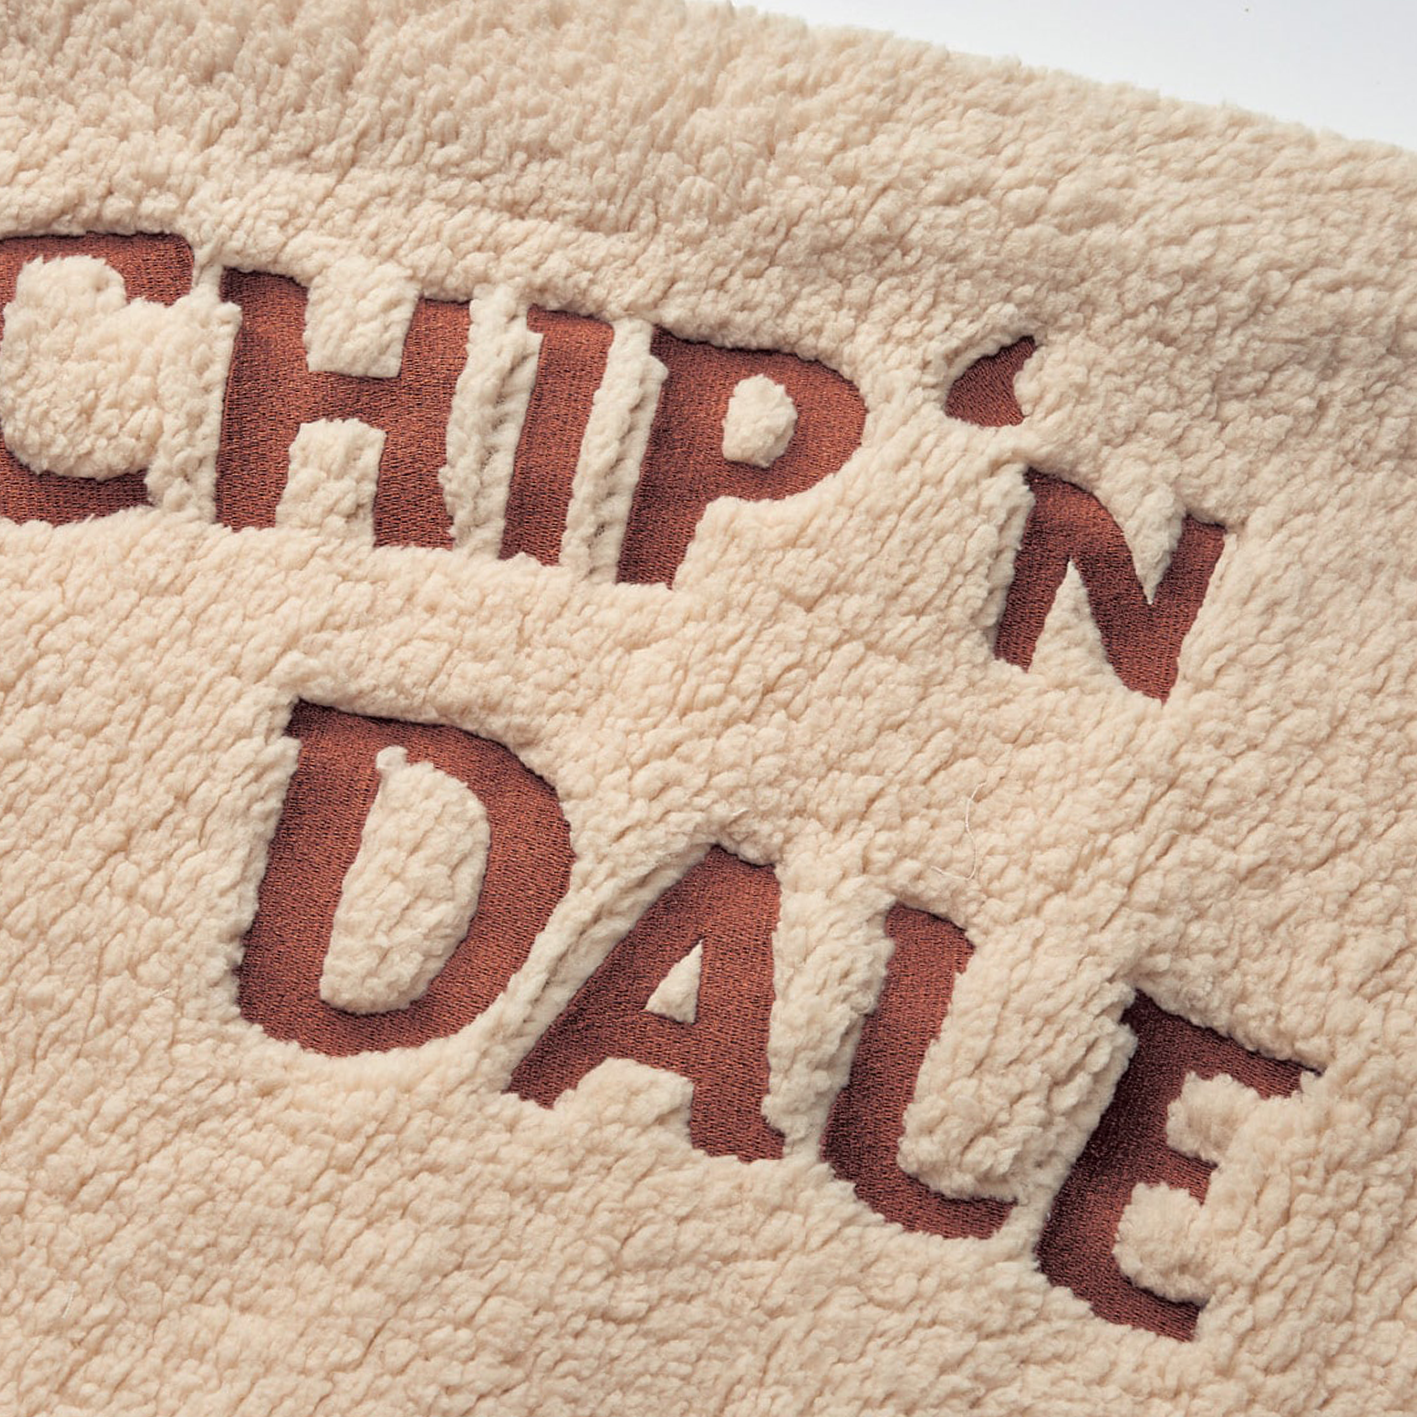  Chip & Dale microfiber duvet cover 